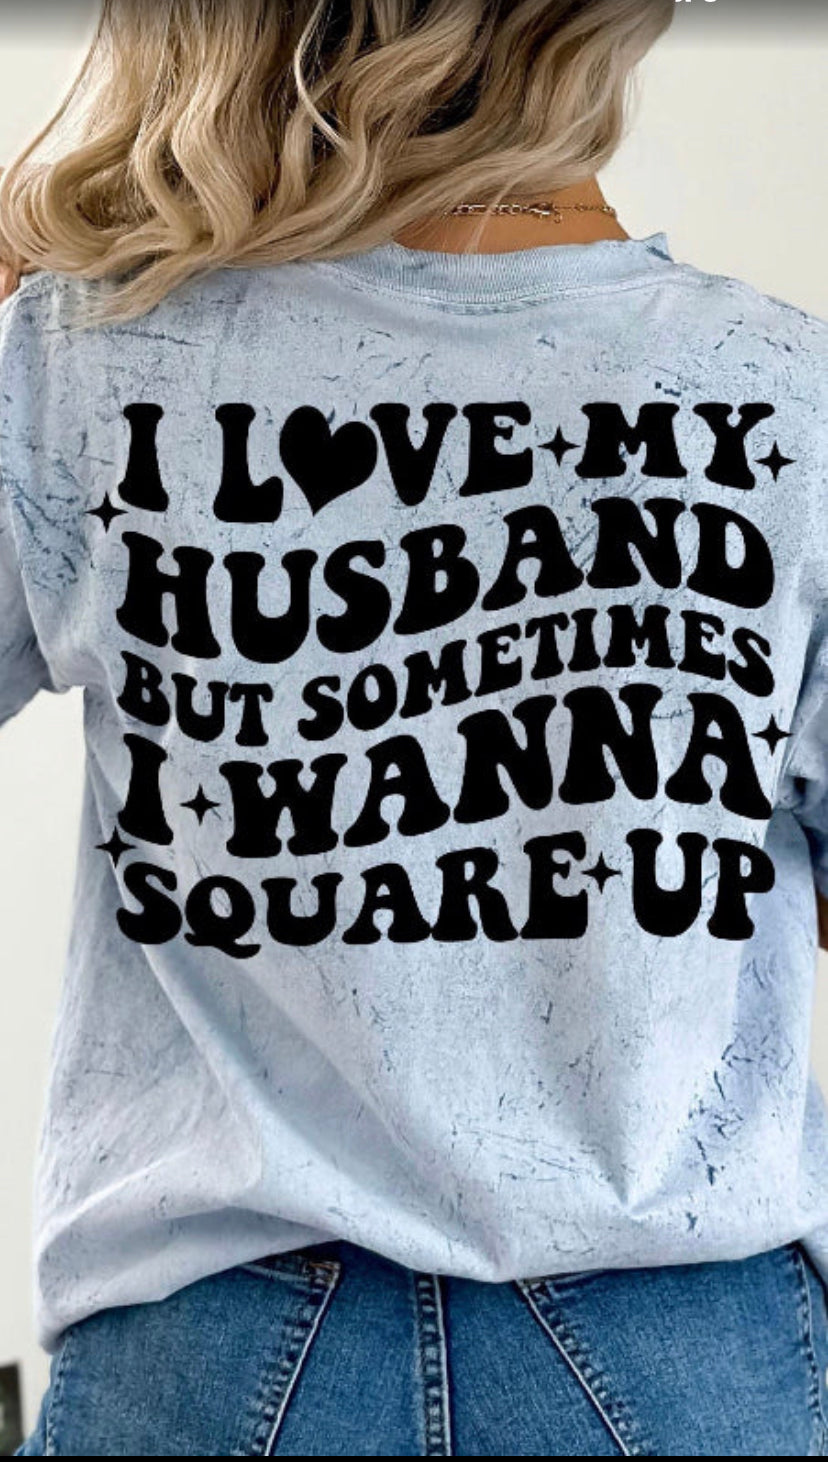 I love my Husband but sometimes I wanna square up